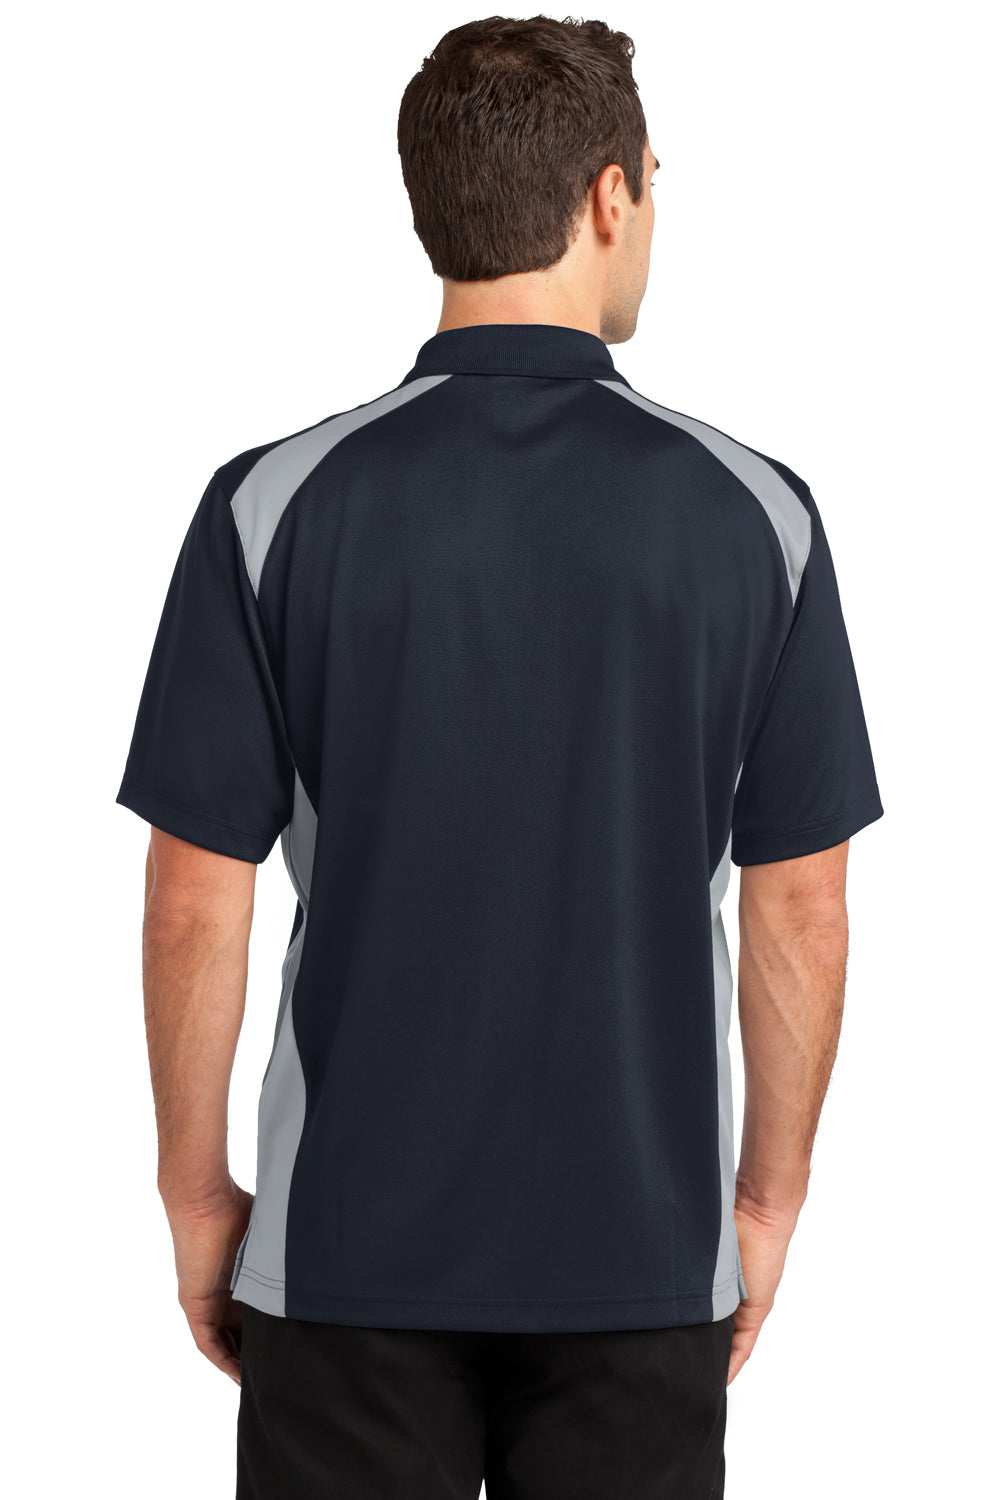 CornerStone CS416 Mens Select Moisture Wicking Short Sleeve Polo Shirt w/ Pocket Navy Blue/Grey Back